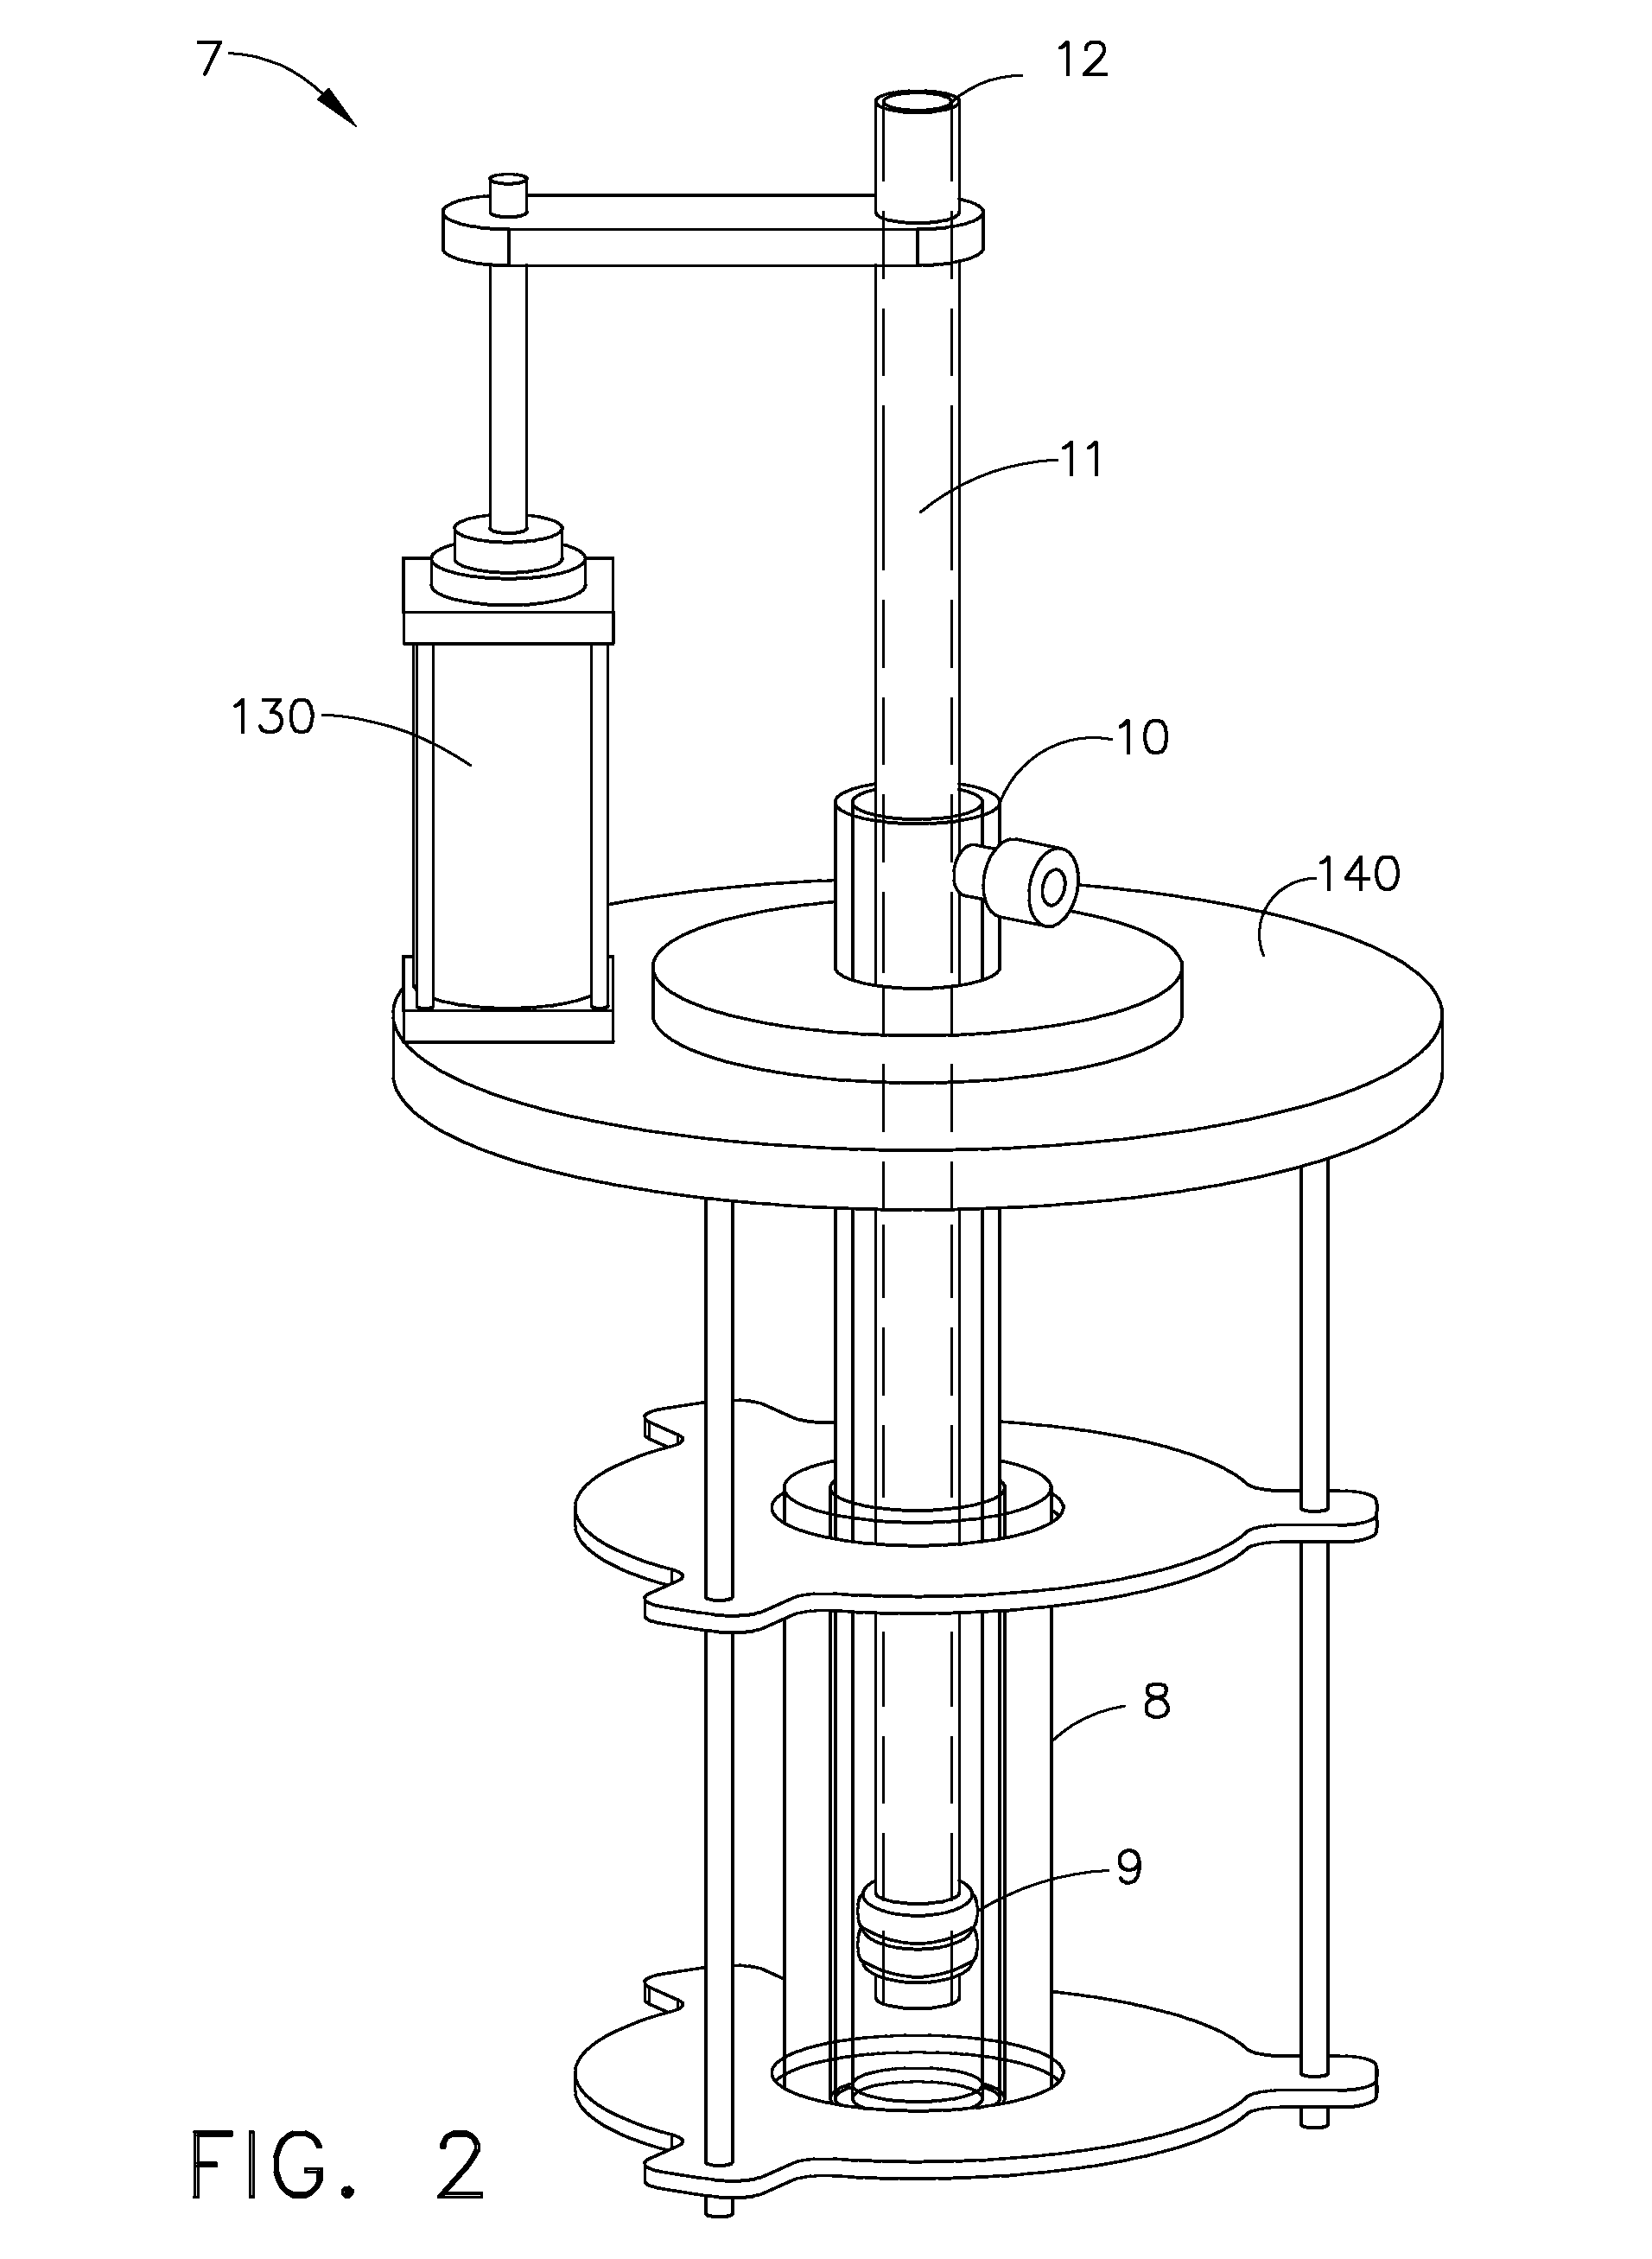 Method and apparatus for cathodic arc ion plasma deposition